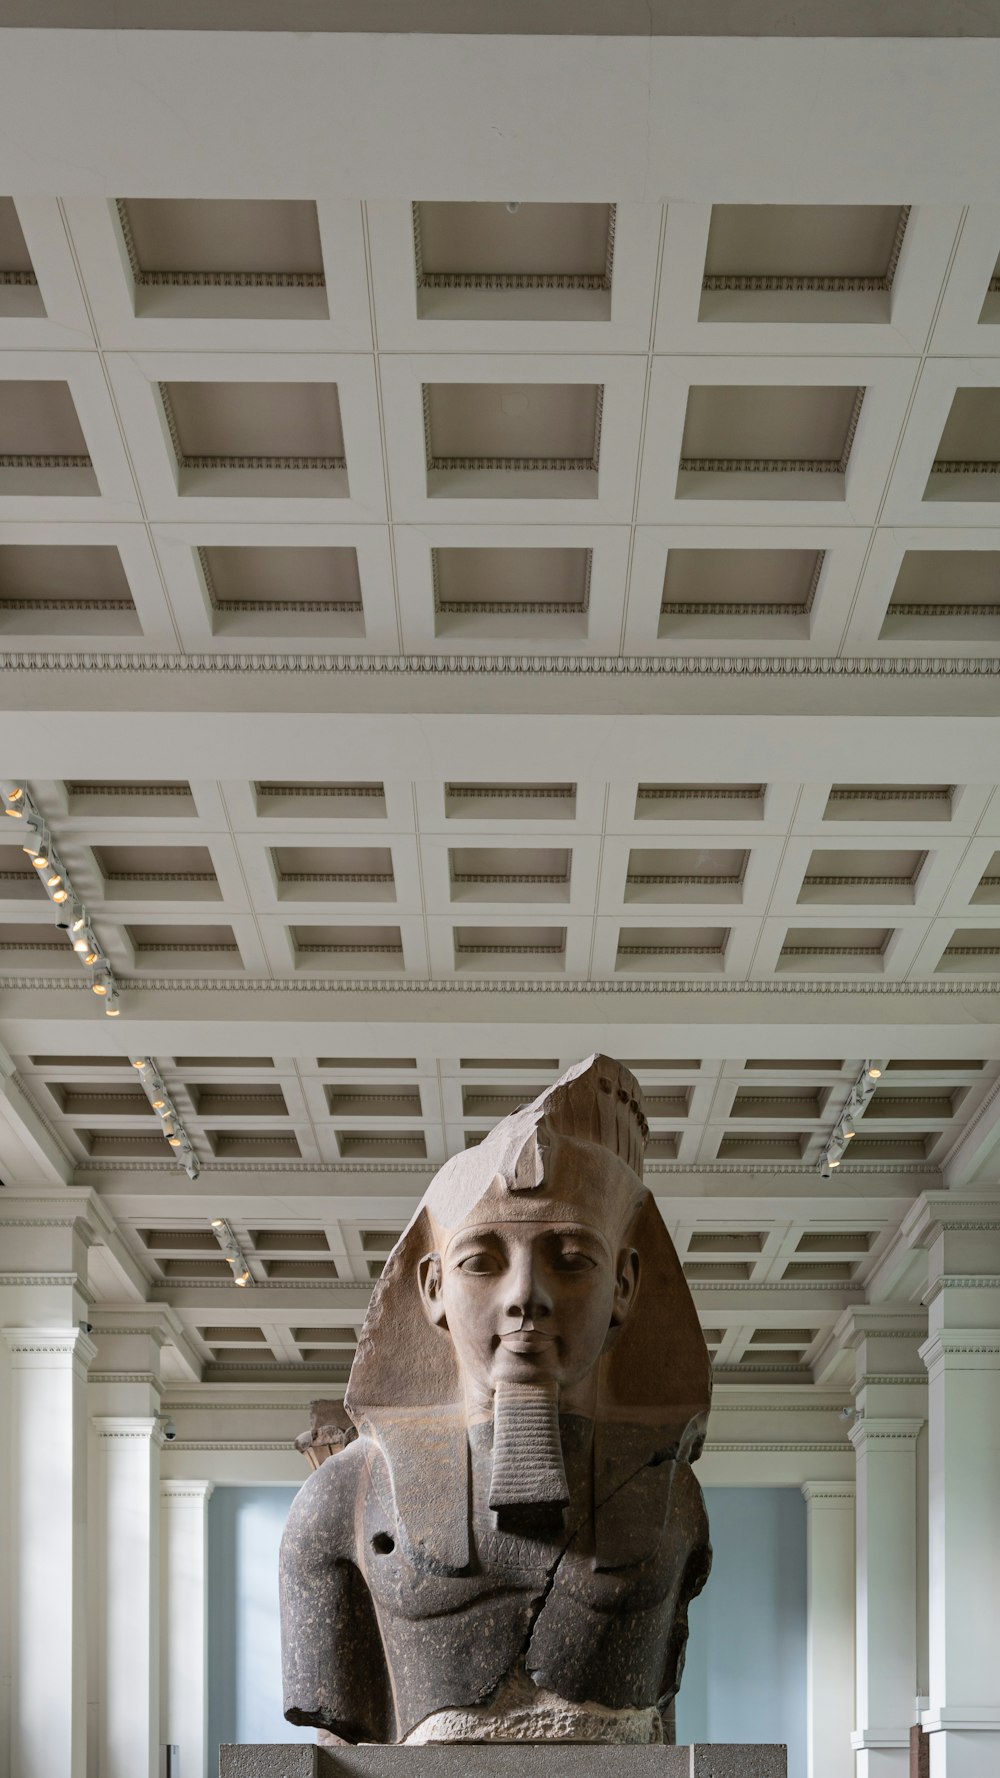 Egyptian pharaoh bust